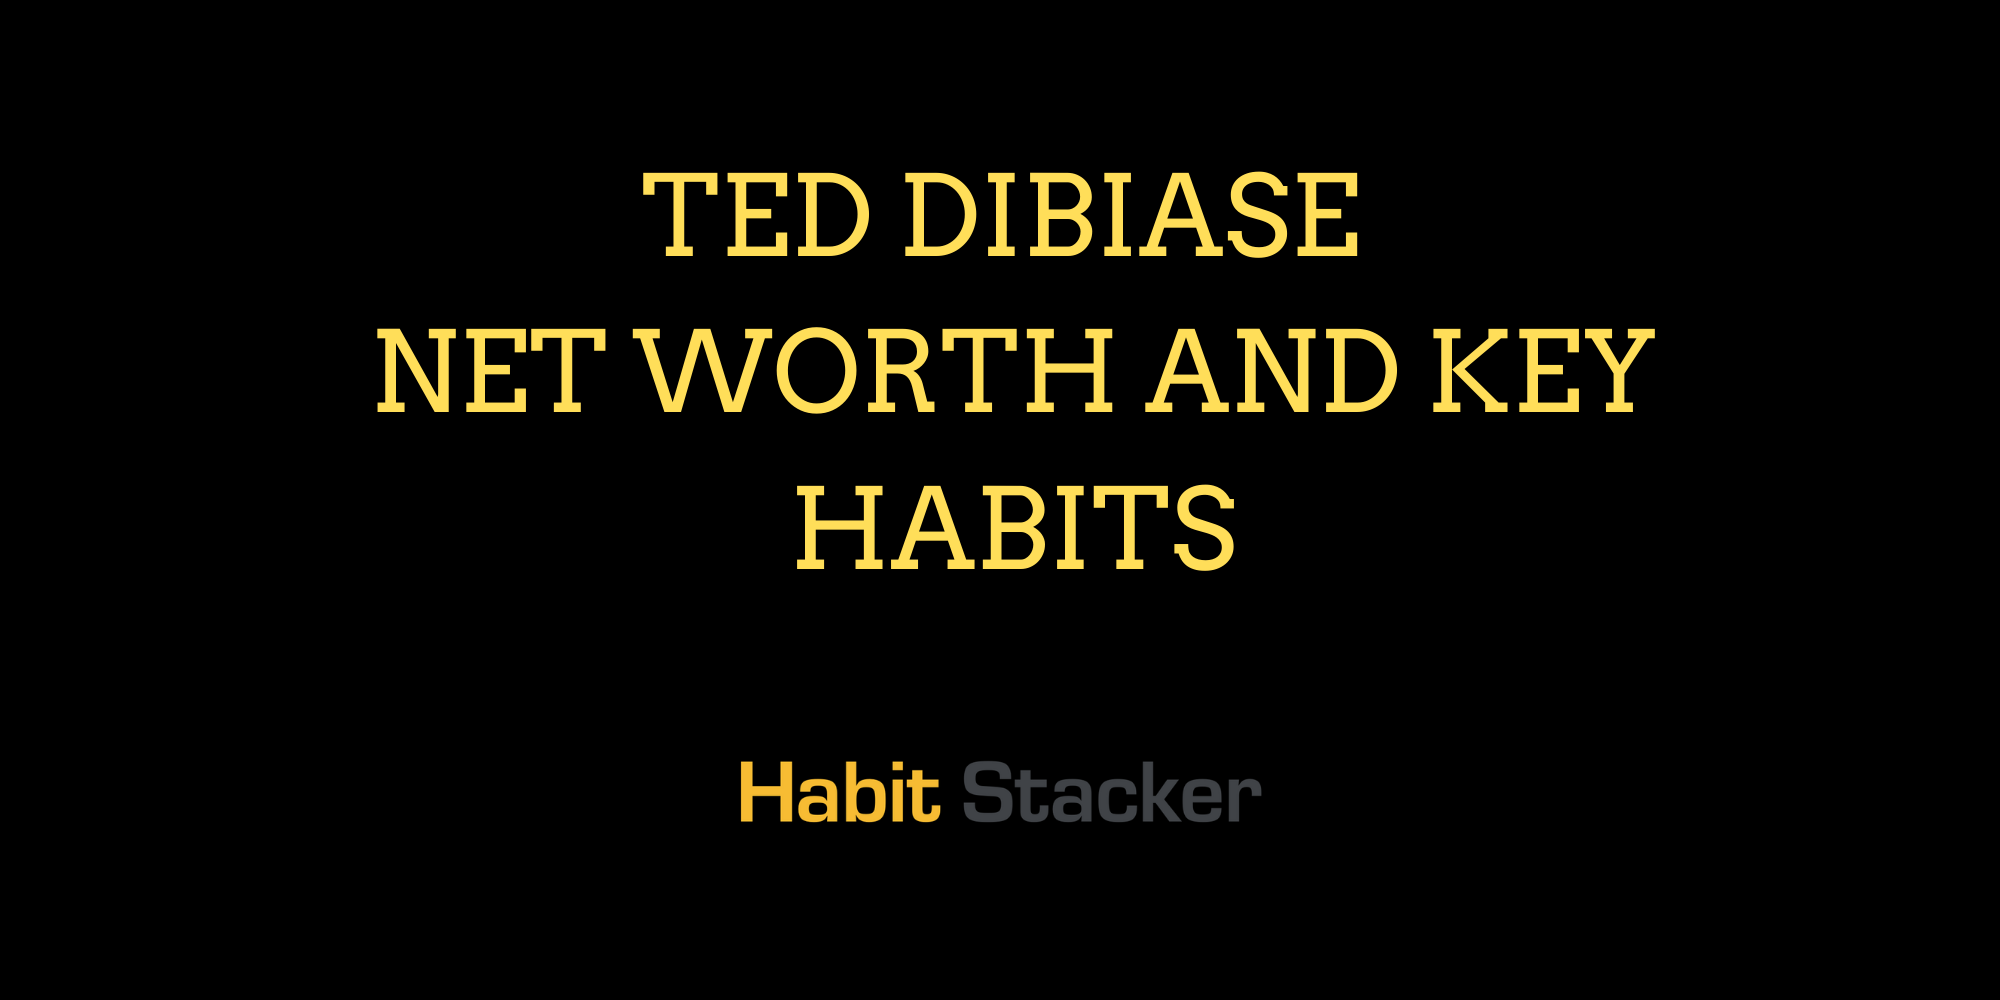 Ted DiBiase Net Worth and Key Habits